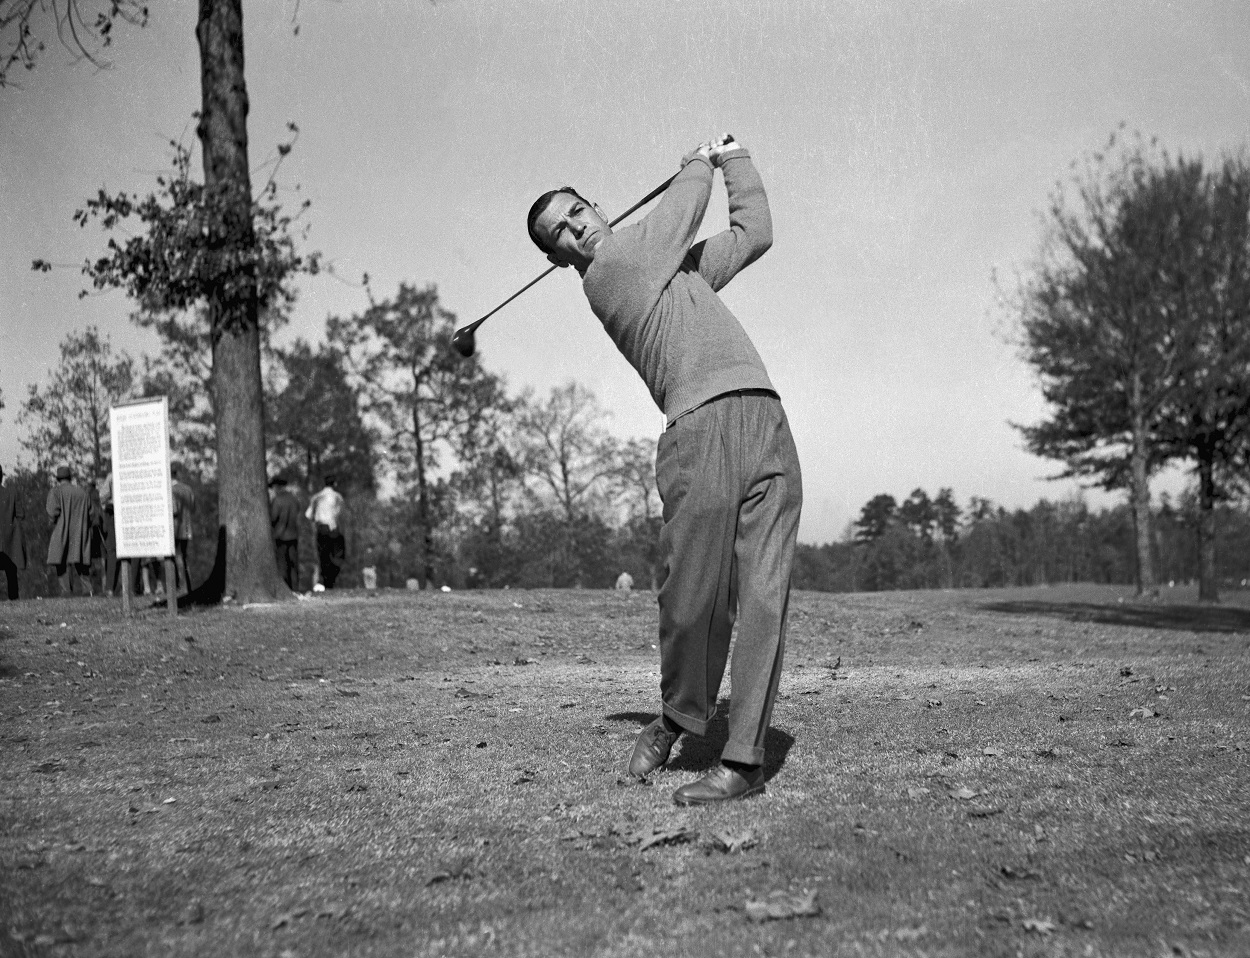 Ben Hogan swings his club at the 1950 U.S. Open